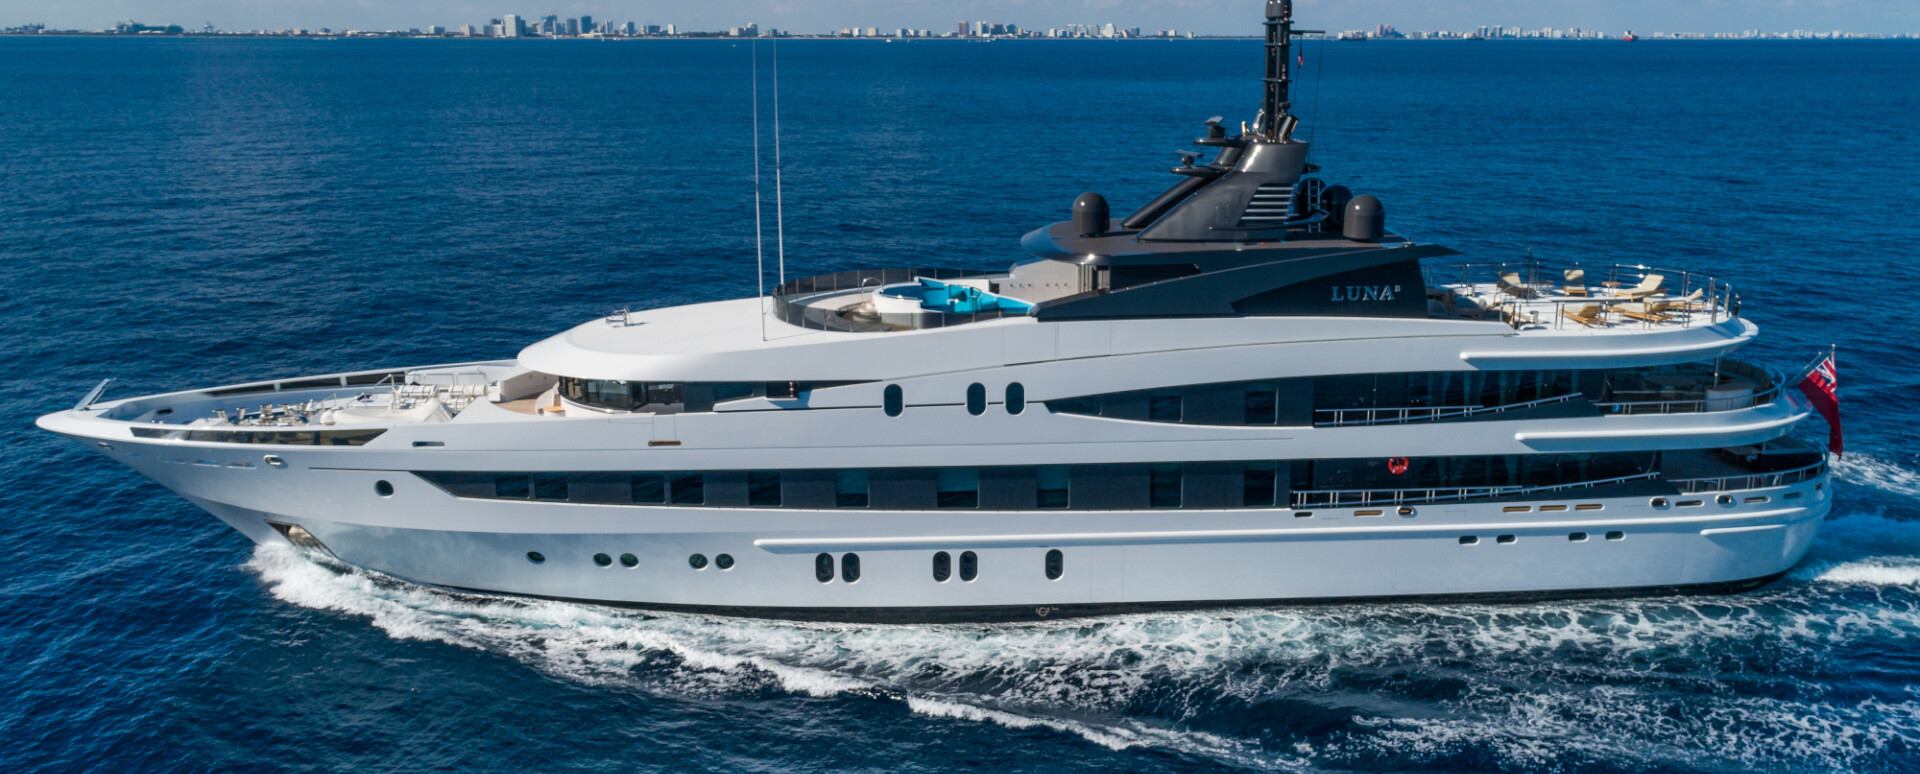                                                                                                     KK Superyachts announces massive € 5,000,000 price reduction on 66m Oceanco M/Y LUNA B
                                                                                            